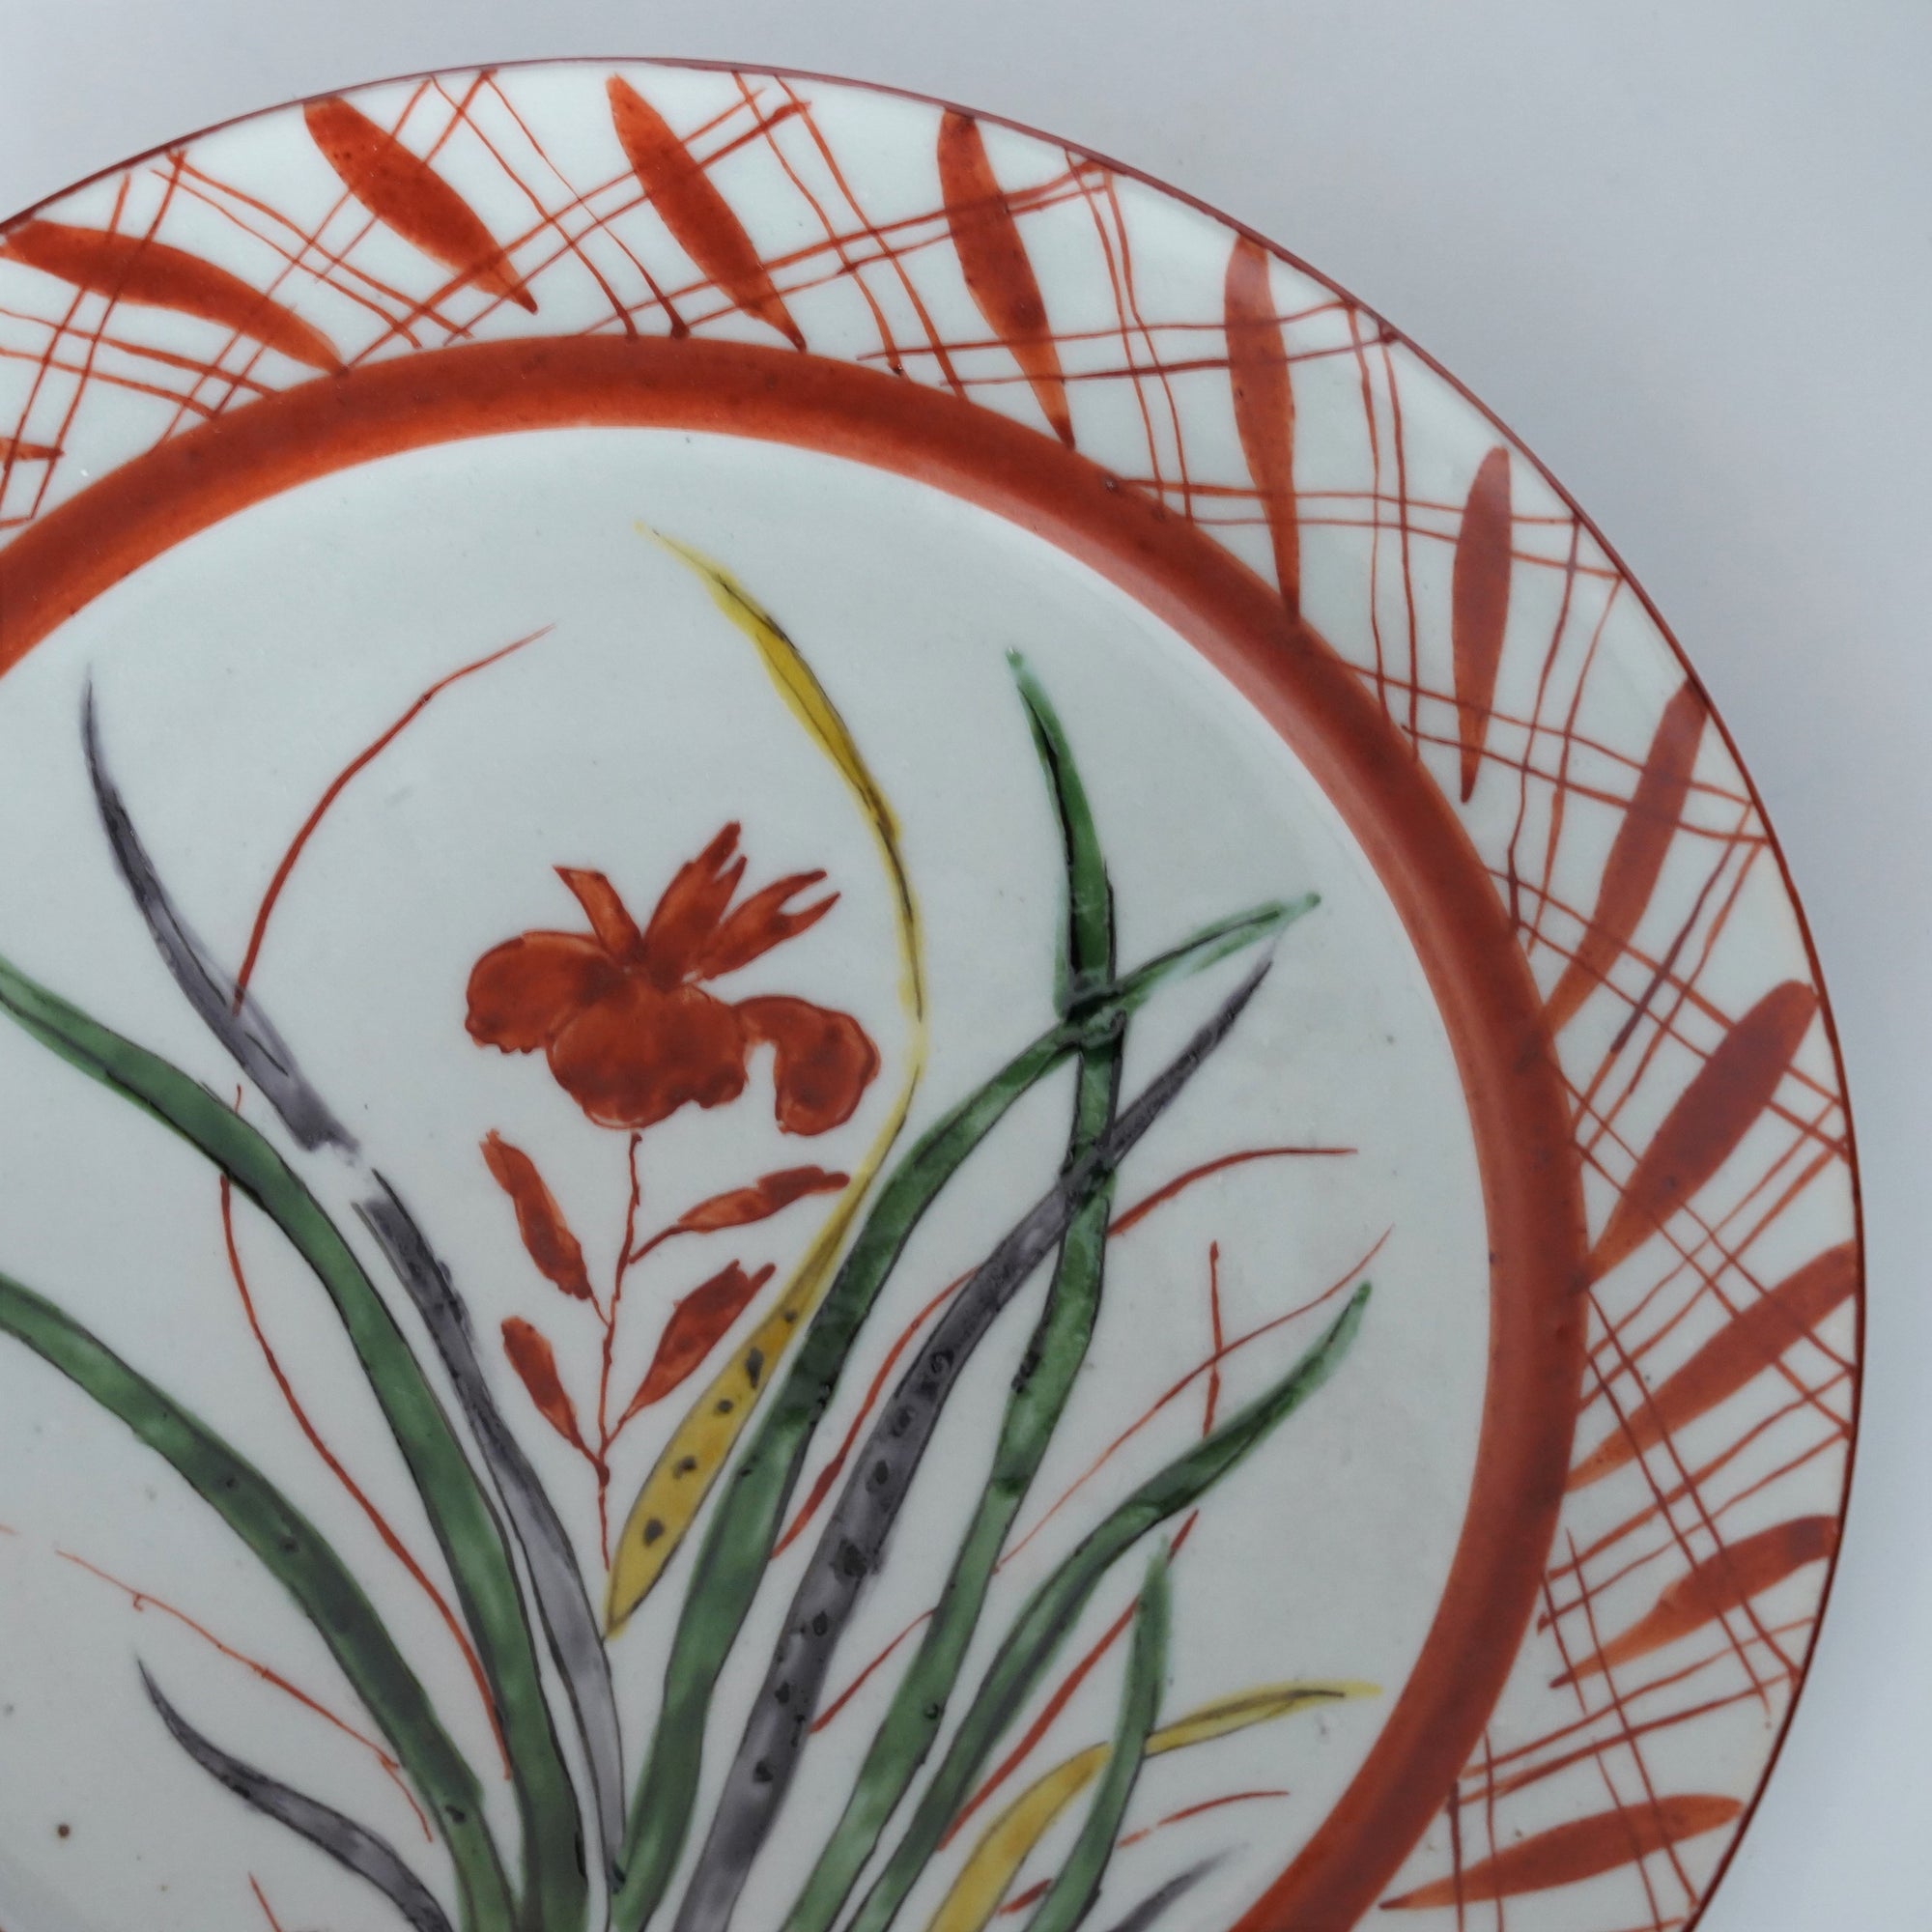 [Toshihiko Hirono] Plate with red iris lattice pattern